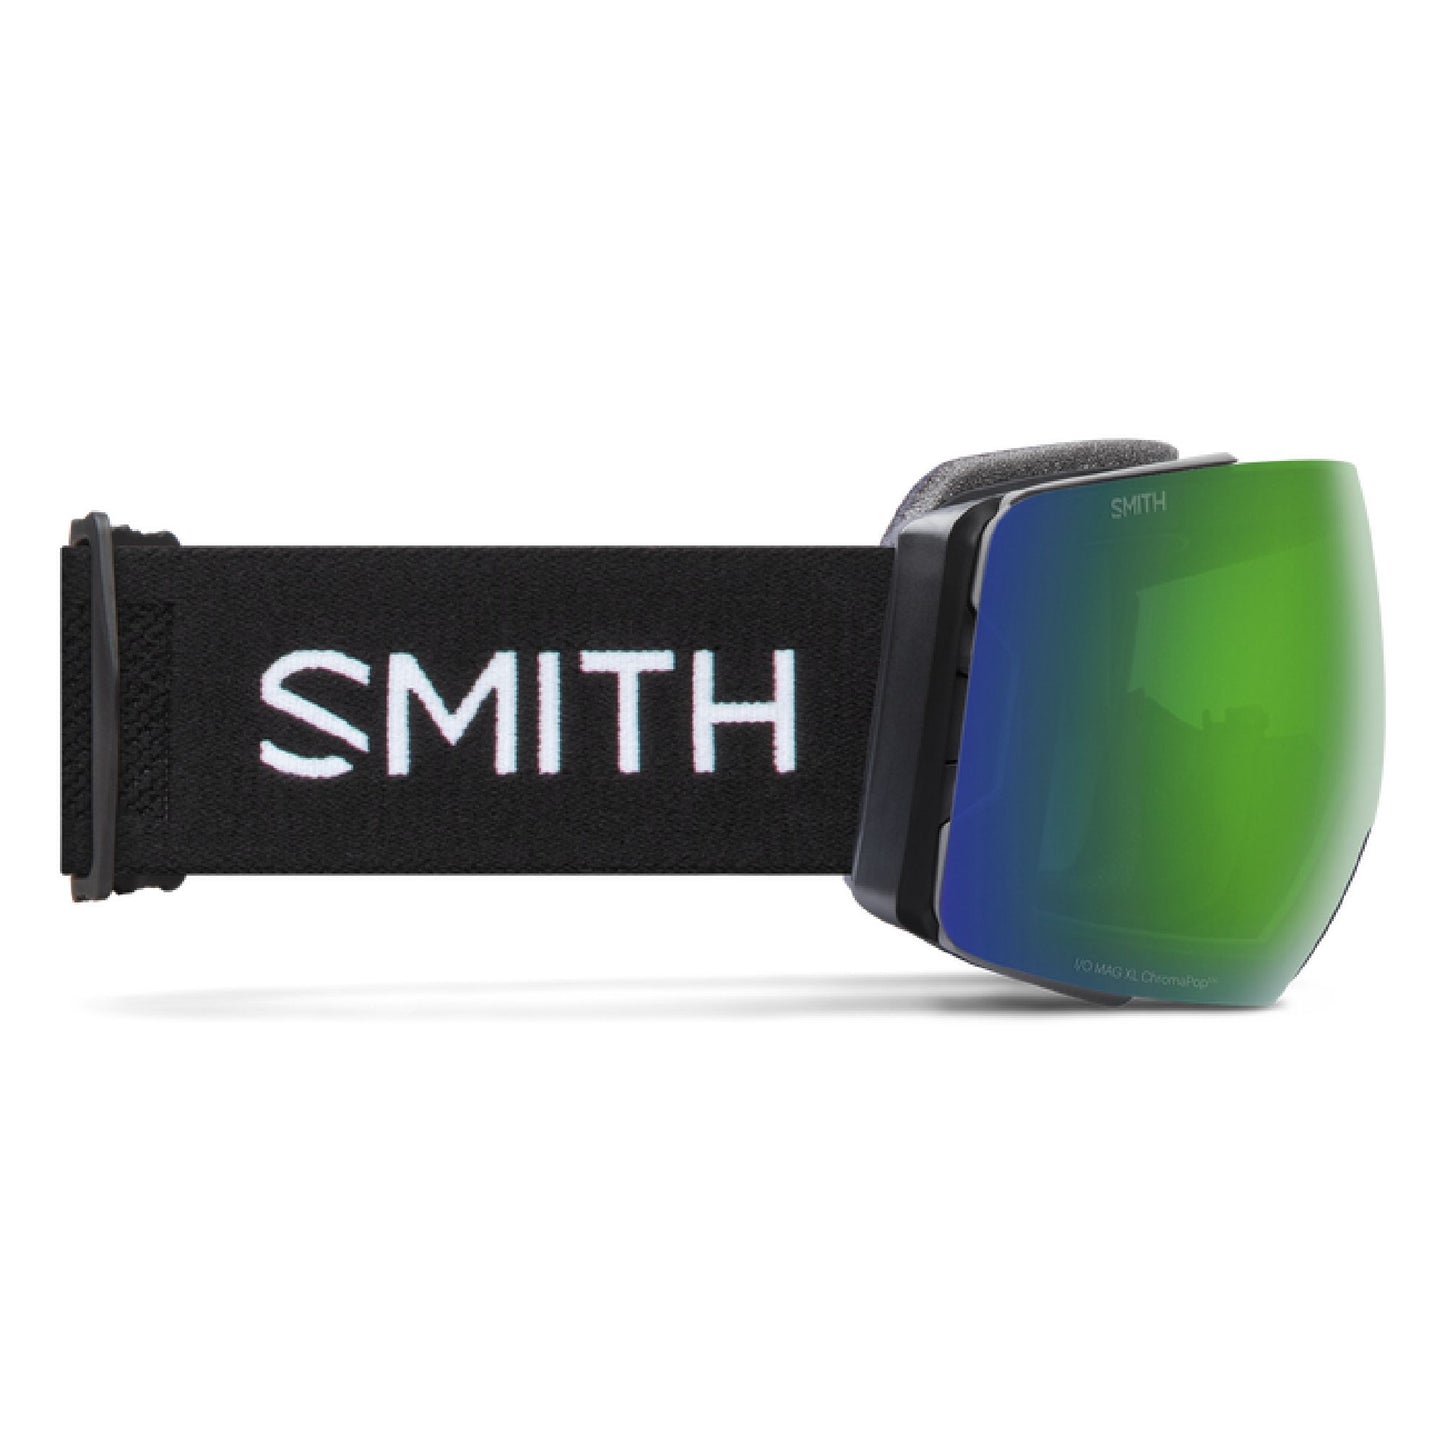 Smith I/O MAG XL Snow Goggle Black / ChromaPop Sun Green Mirror Snow Goggles